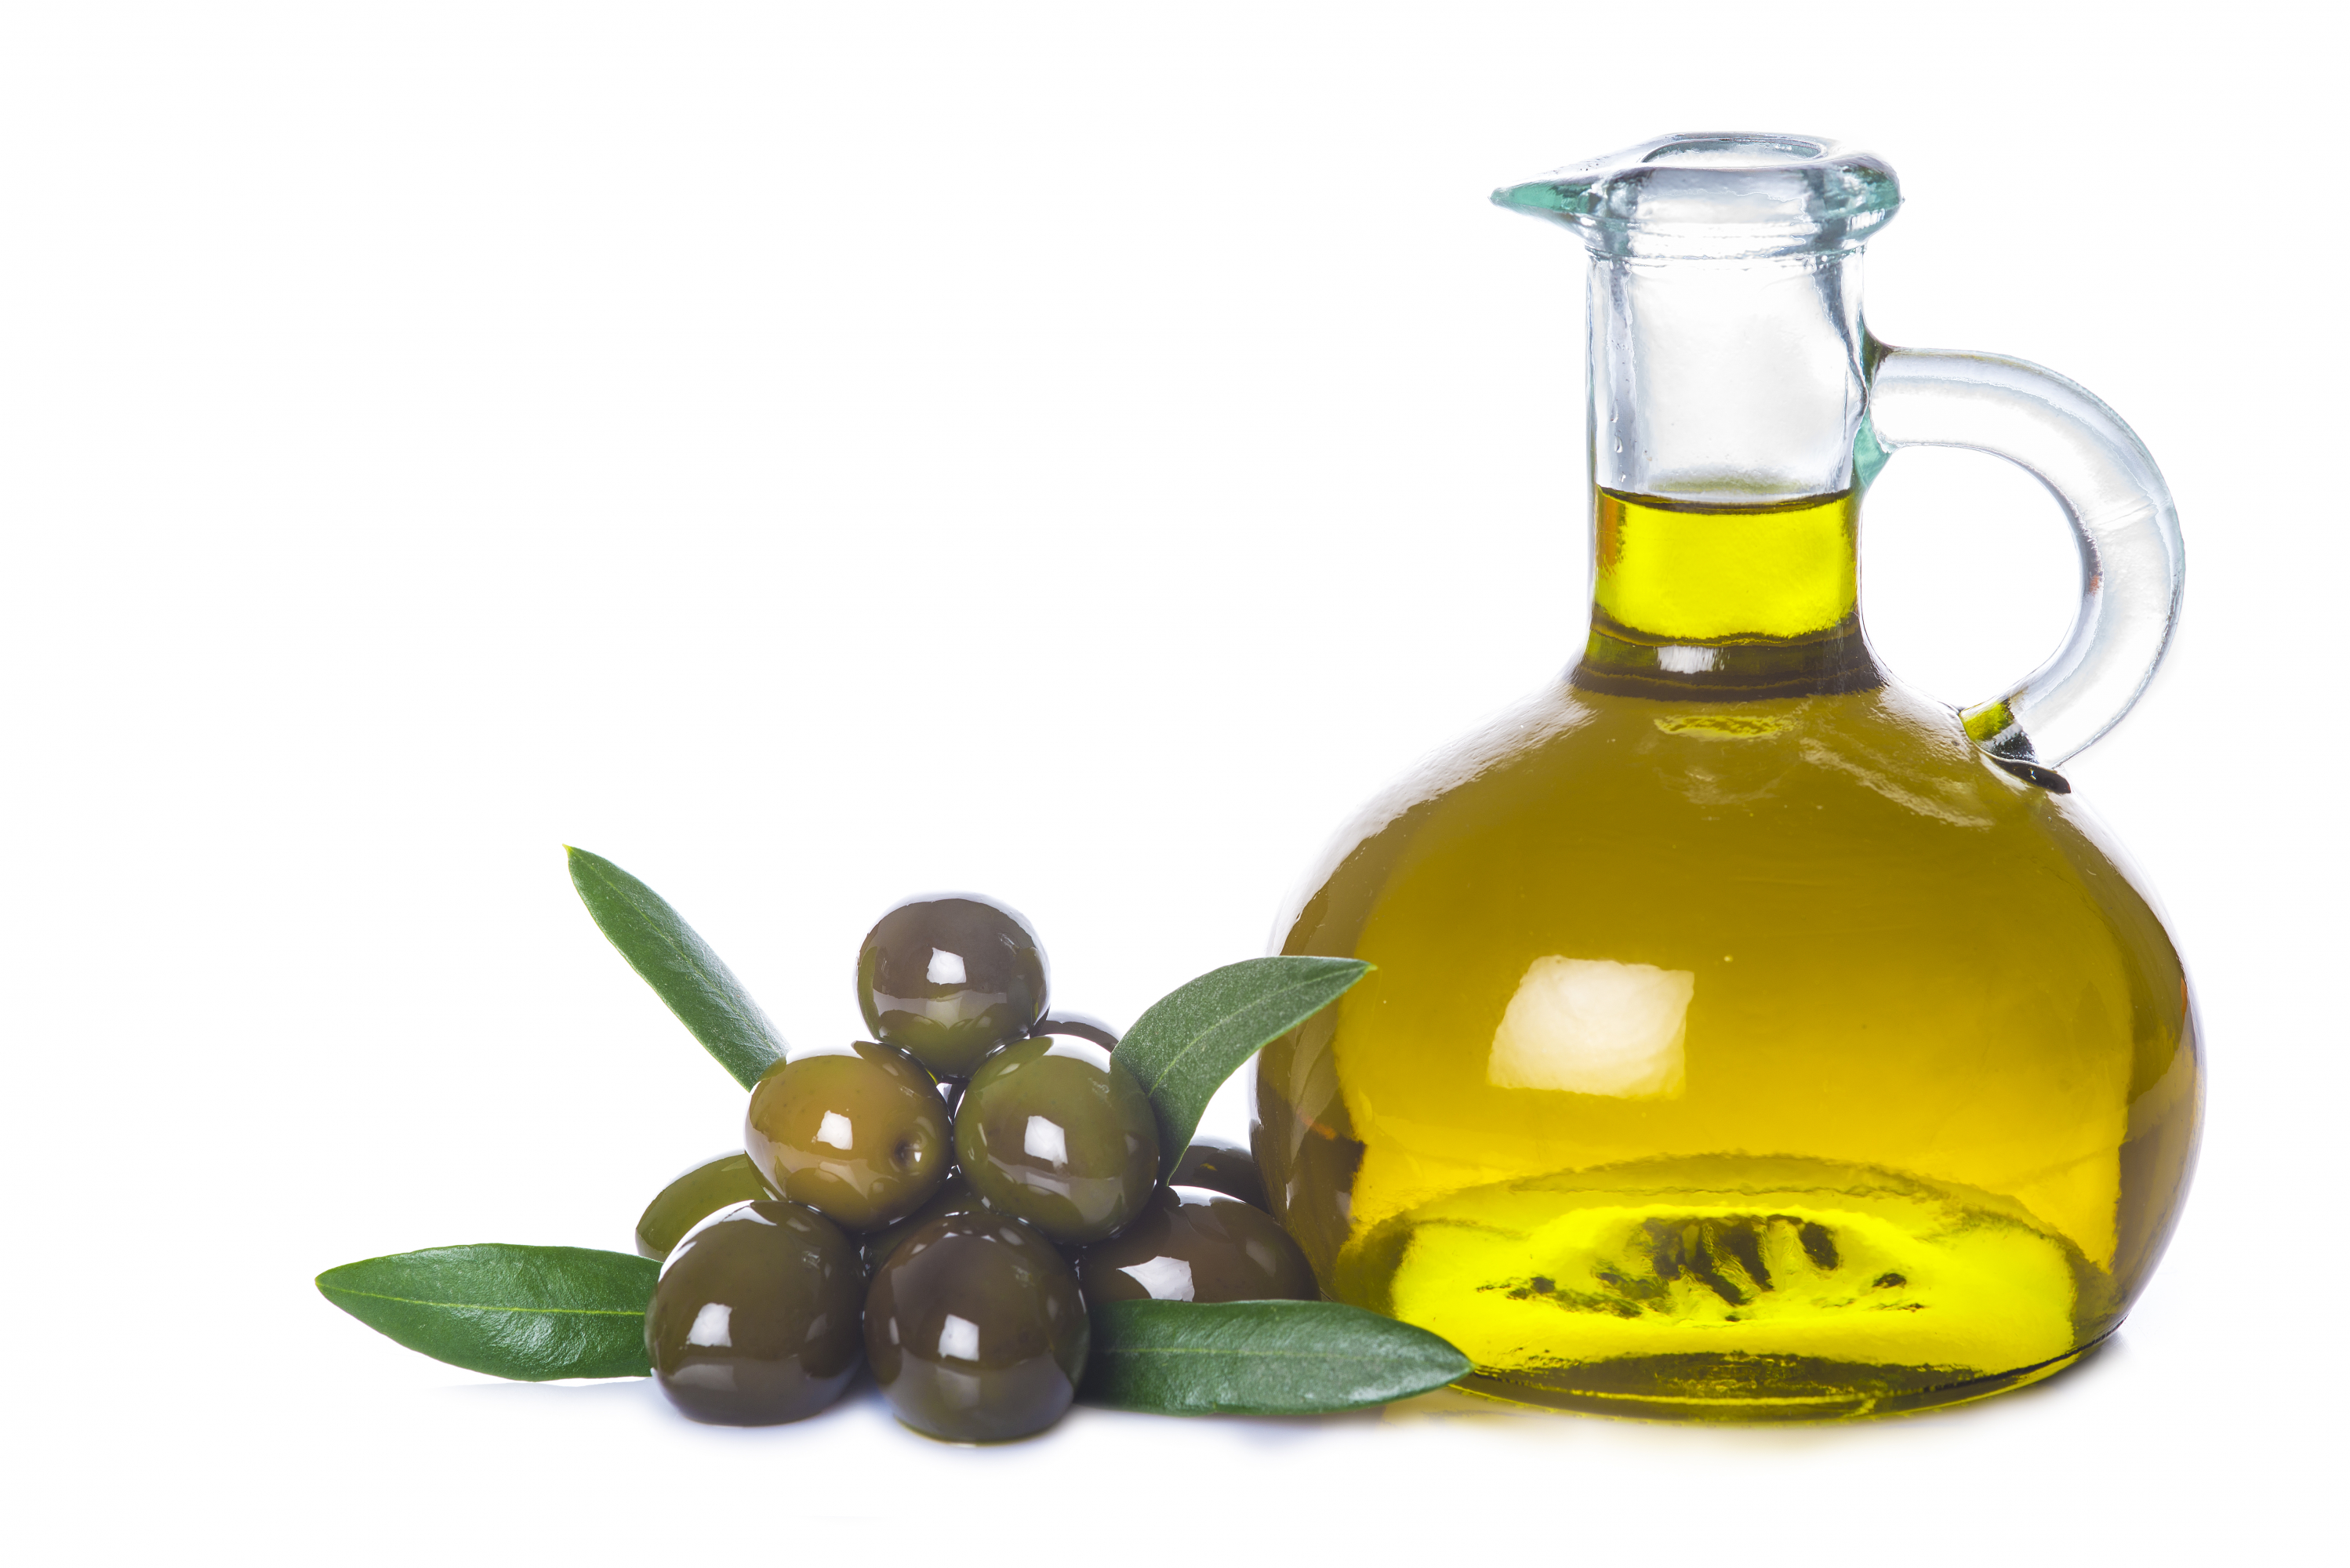 A bottle of olive oil. Бутылка оливкового масла. Бутылка и оливки. Масло оливы на белом фоне. Бутылочка с оливковым маслом на белом фоне.